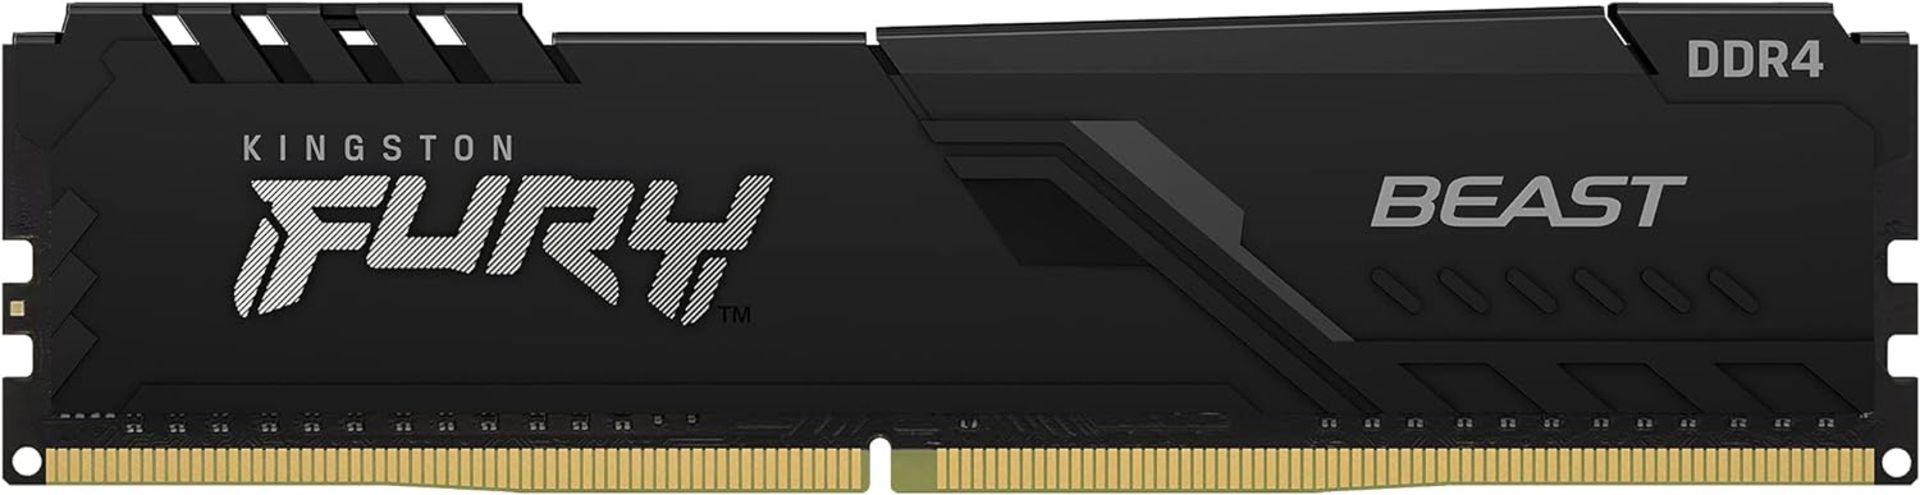 3x BRAND NEW FACTORY SEALED KINGSTON Fury Beast DDR4 16GB Kit (KF432C16BBK2/16). RRP £49.99 EACH. - Image 3 of 5